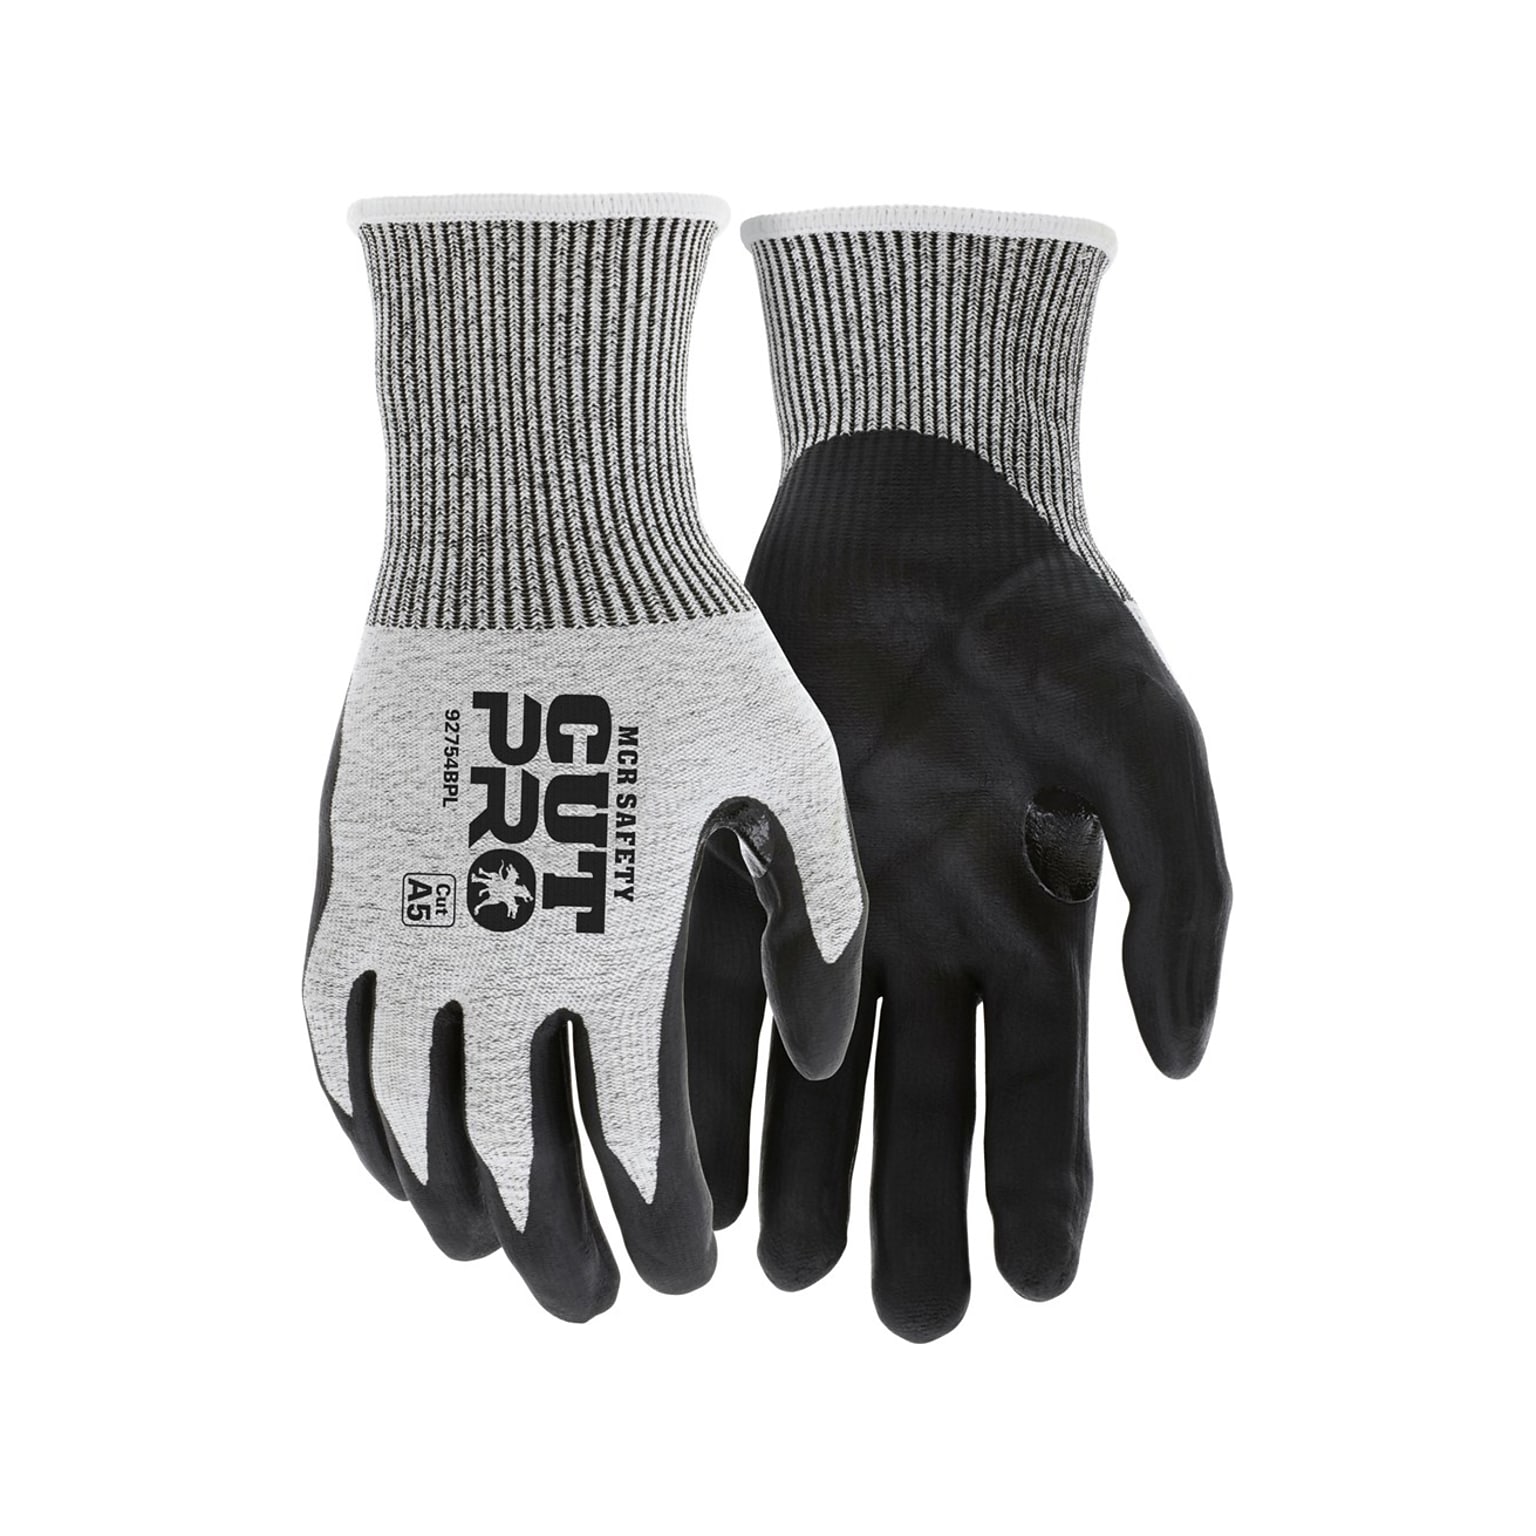 MCR Safety Cut Pro Hypermax Fiber/Bi-Polymer Work Gloves, Salt-and-Pepper/Black, XXL, Pair (92754BPXXL)